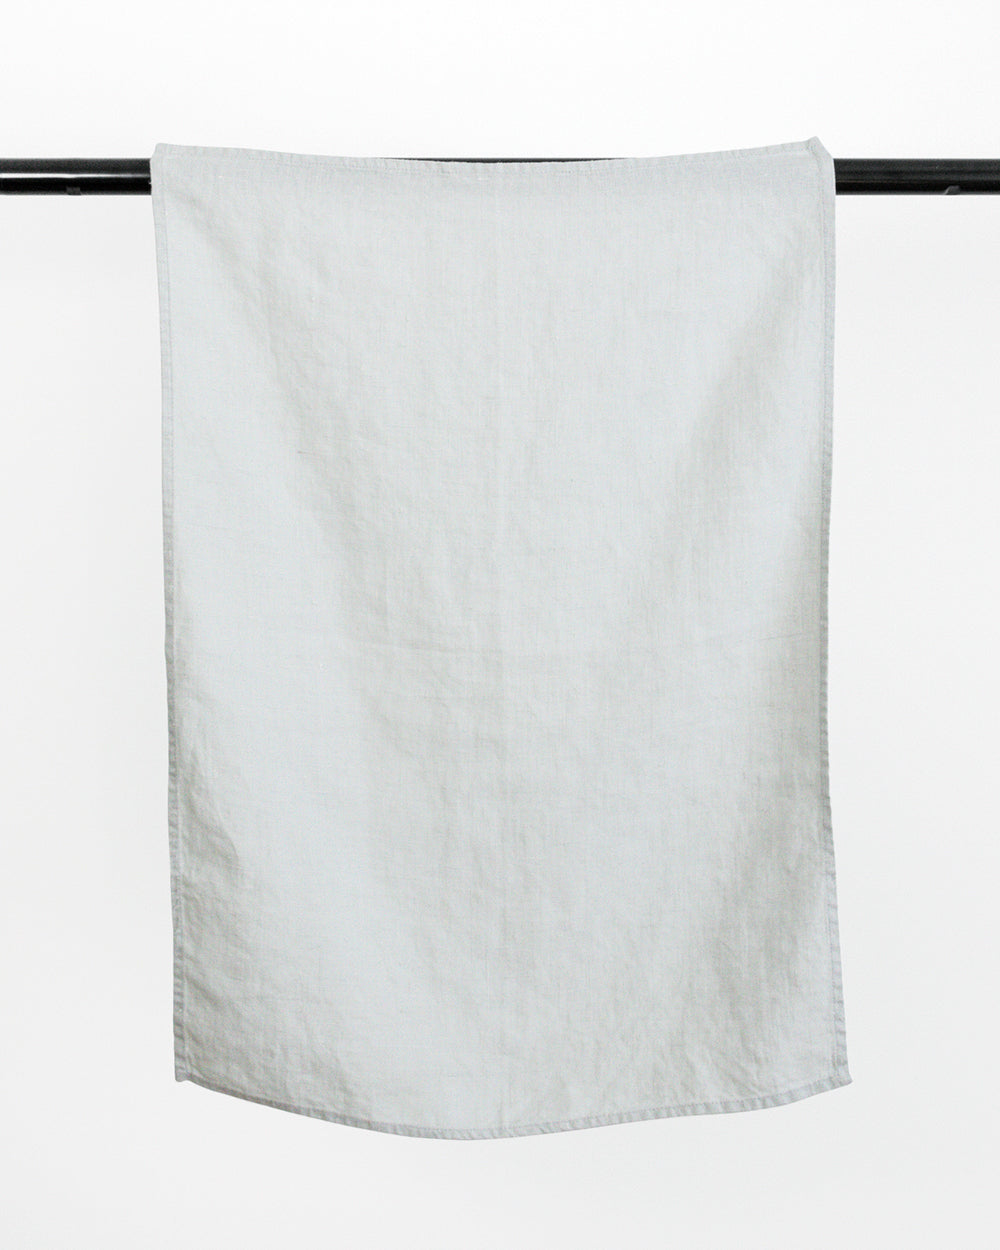 Blue stonewashed linen tea towel hanging on black rod